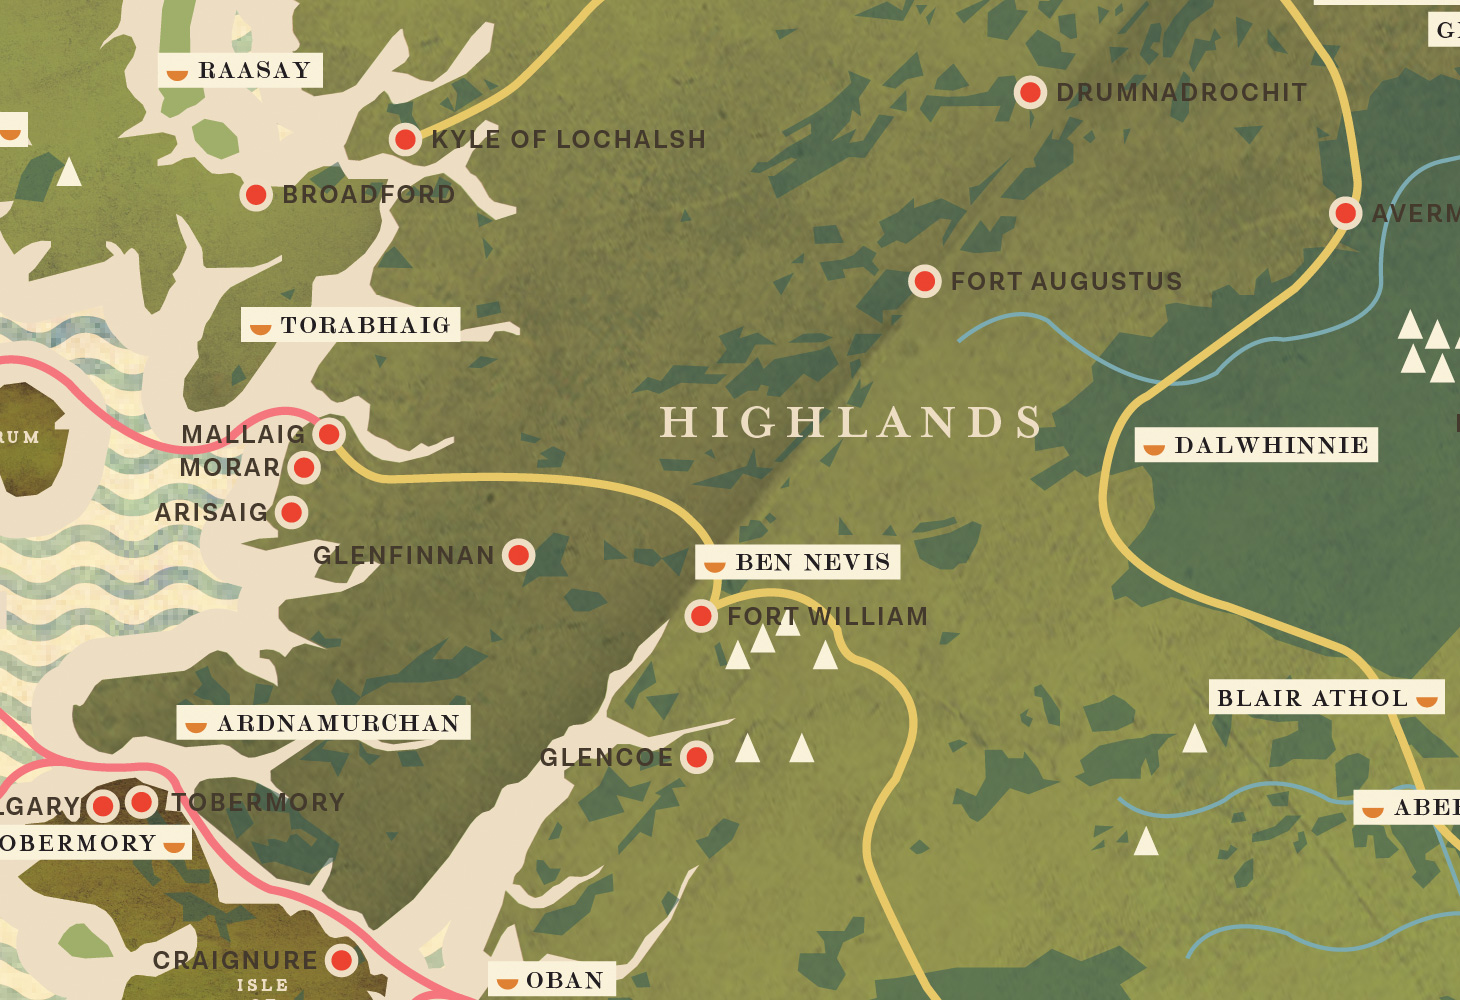 Whiskies of Scotland - Map - Highlands